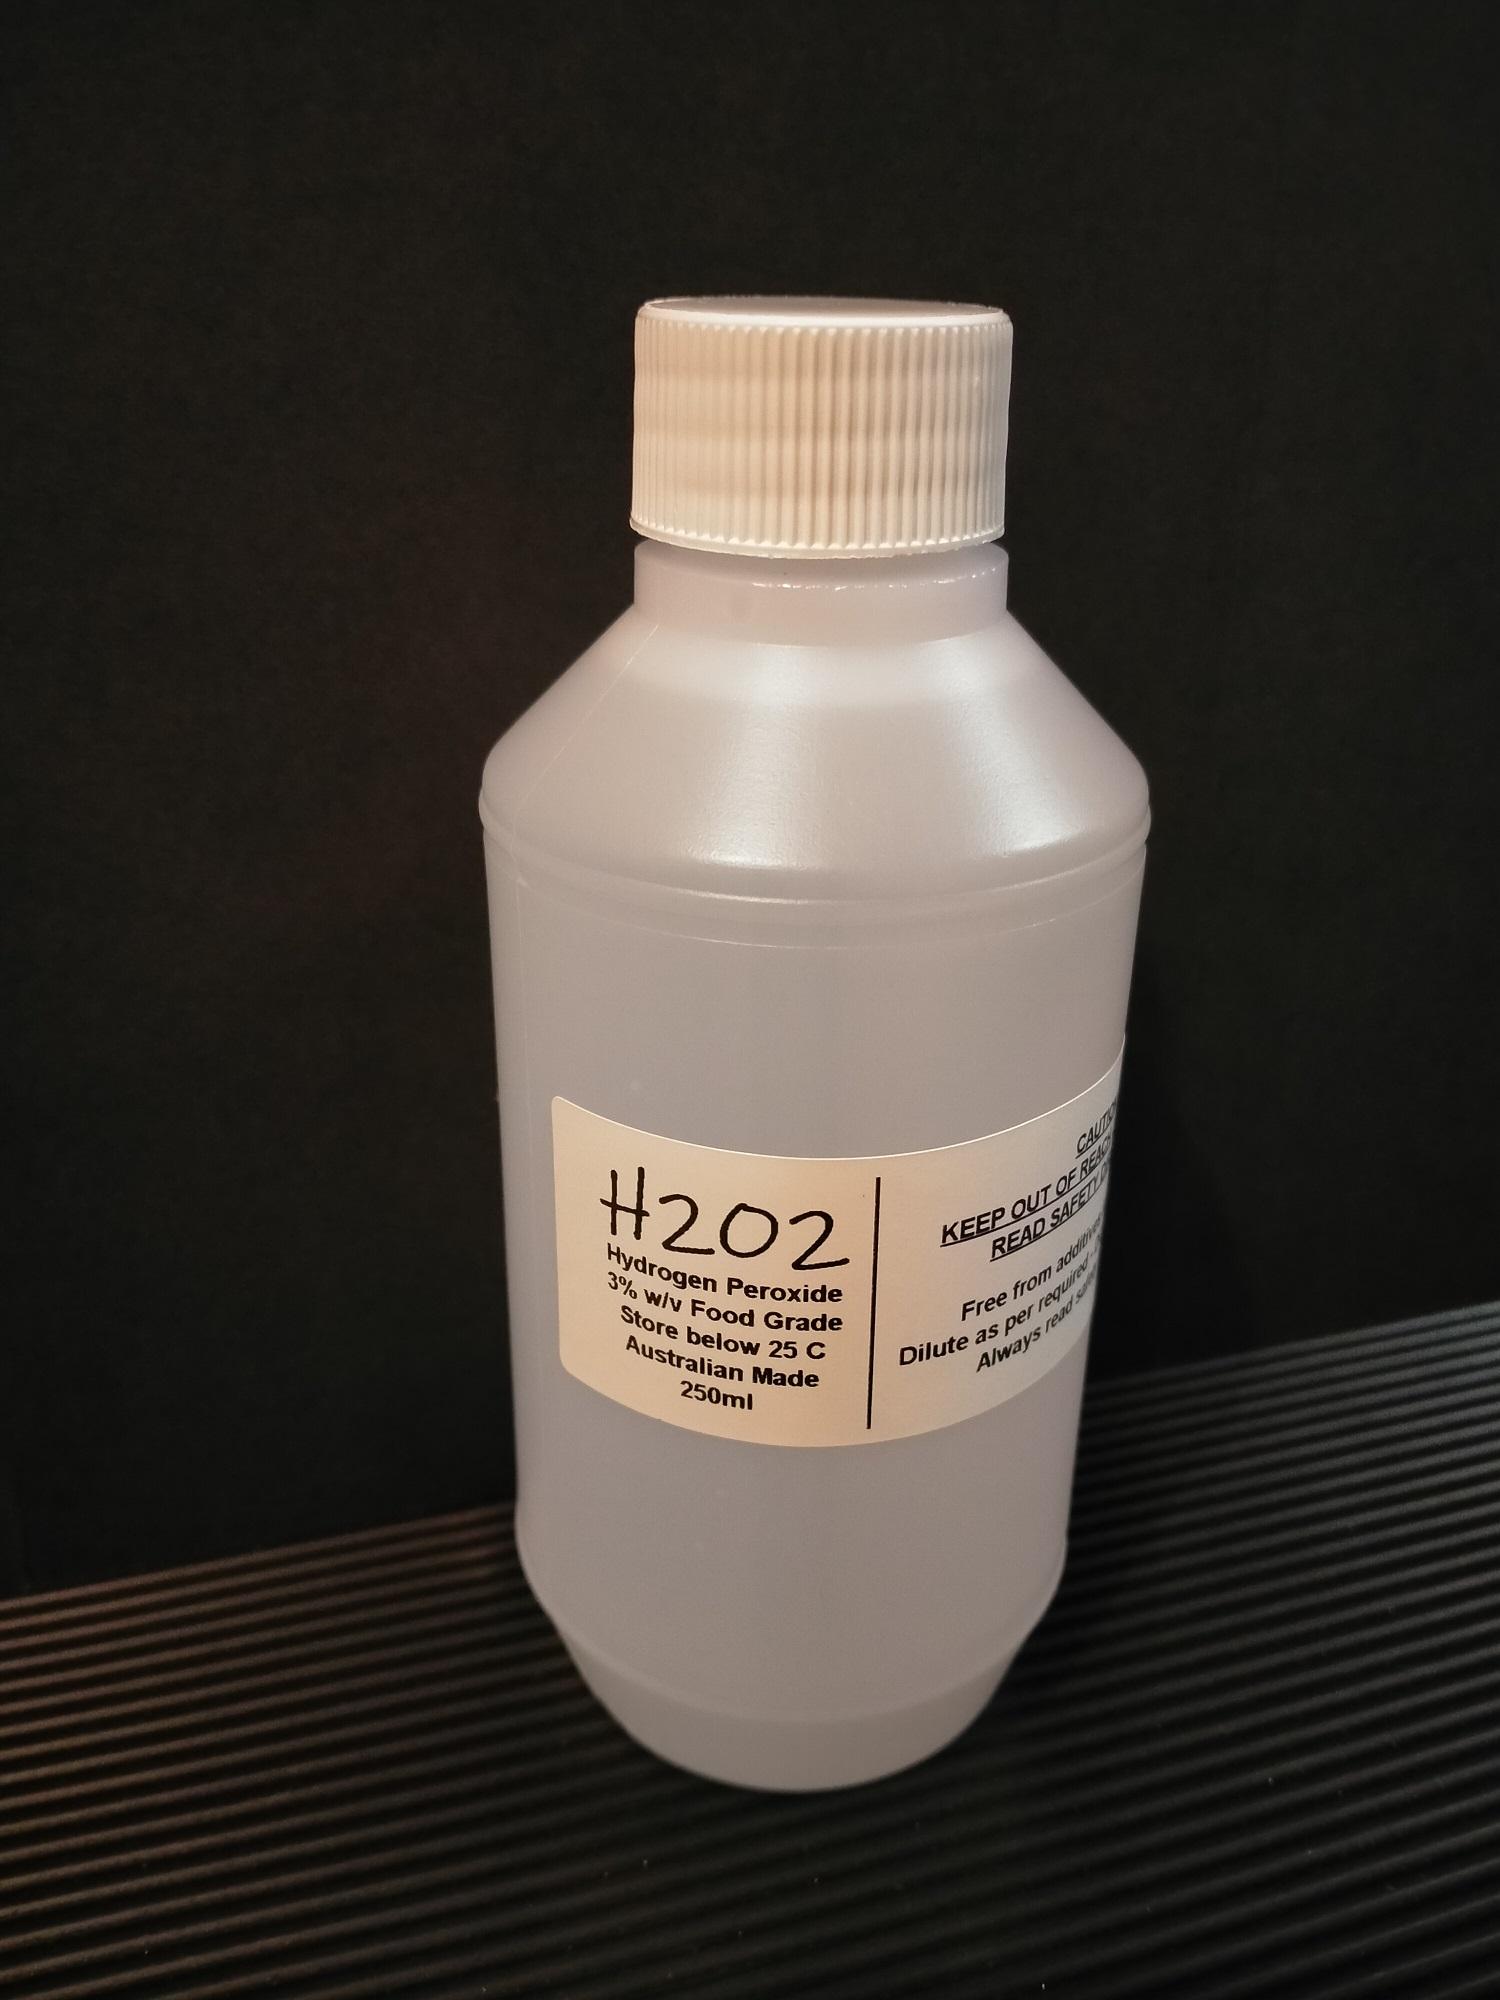 Food Grade Hydrogen Peroxide Australia h2o2 35